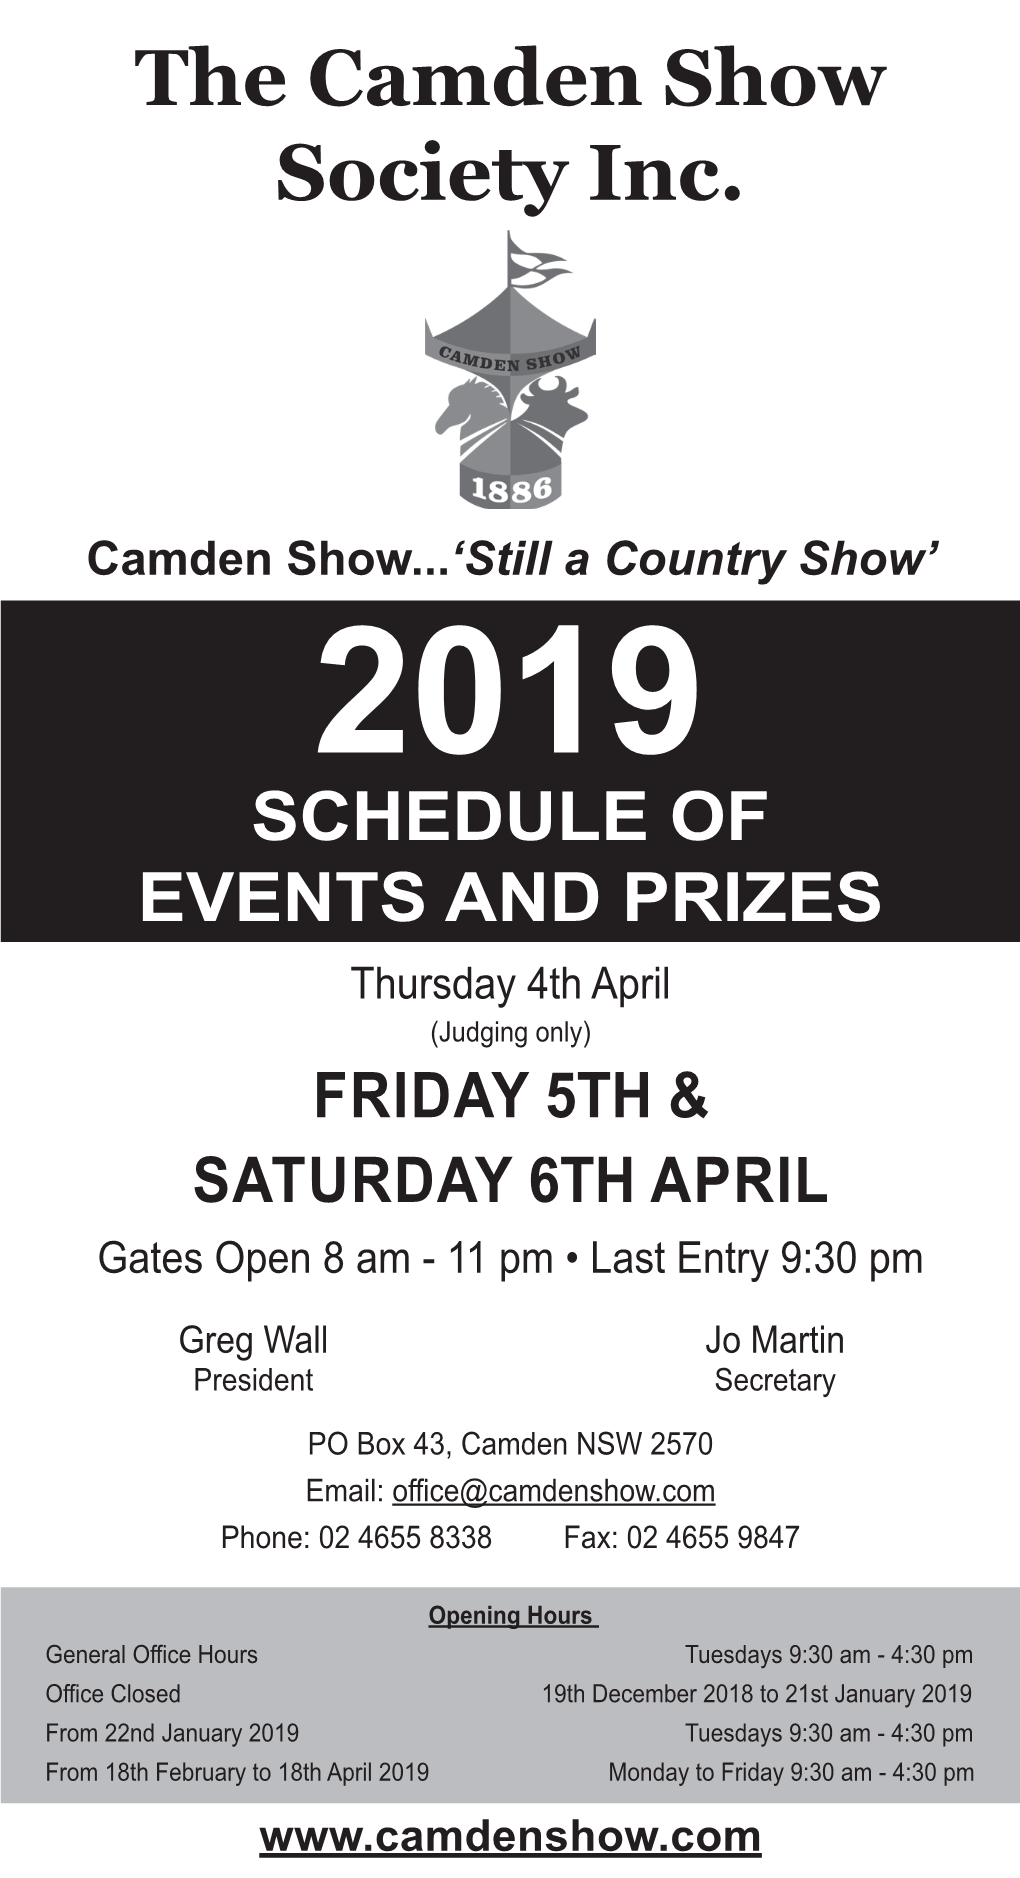 The Camden Show Society Inc